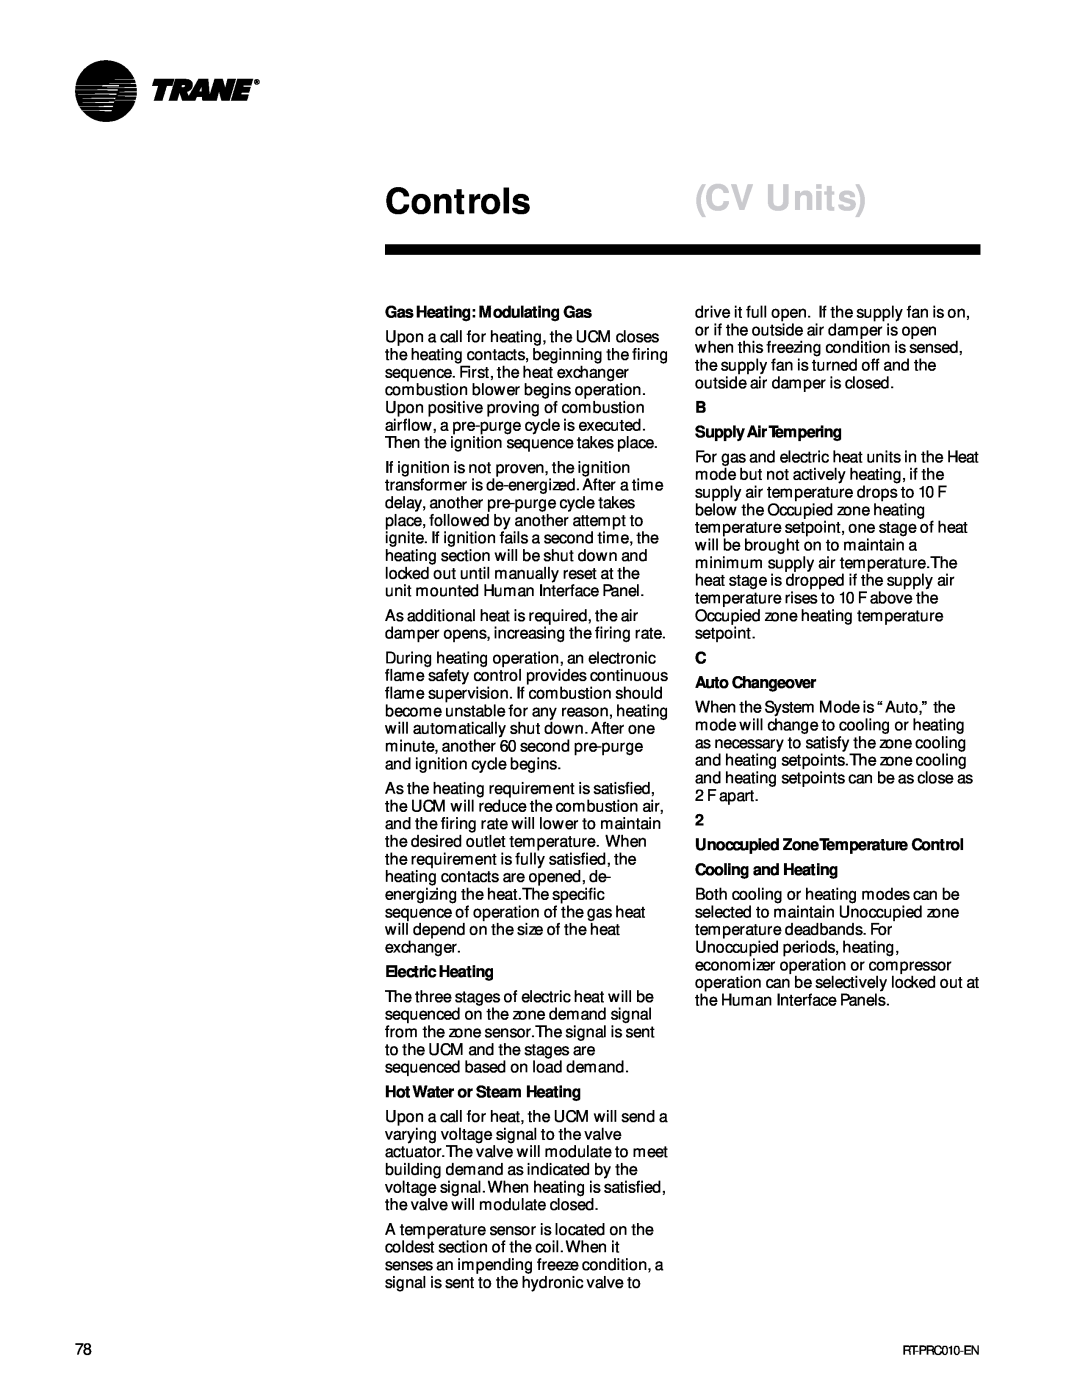 Trane RT-PRC010-EN manual Controls, CV Units, Gas Heating Modulating Gas, Electric Heating, HotWater or Steam Heating 